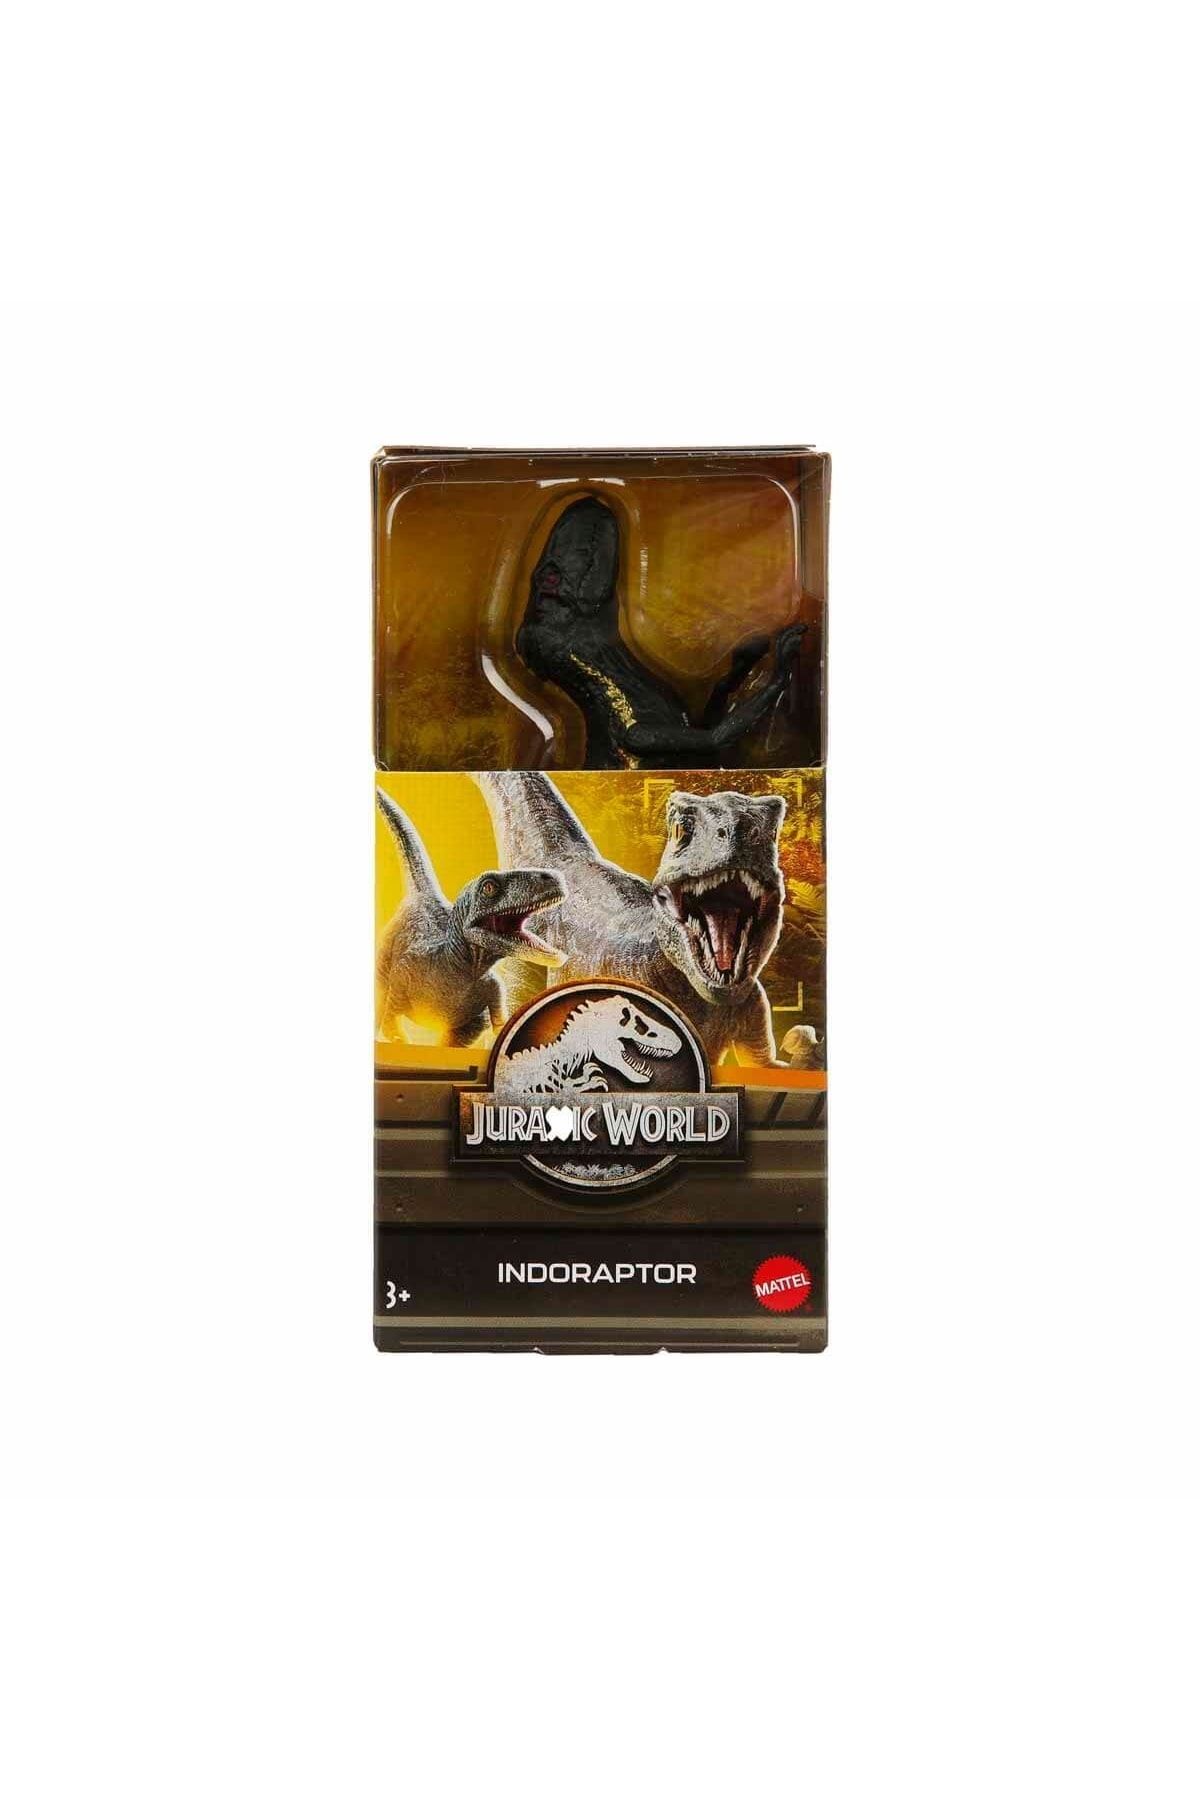 Jurassic World 6' Dinozor Figürü Gwt49 - Indoraptor